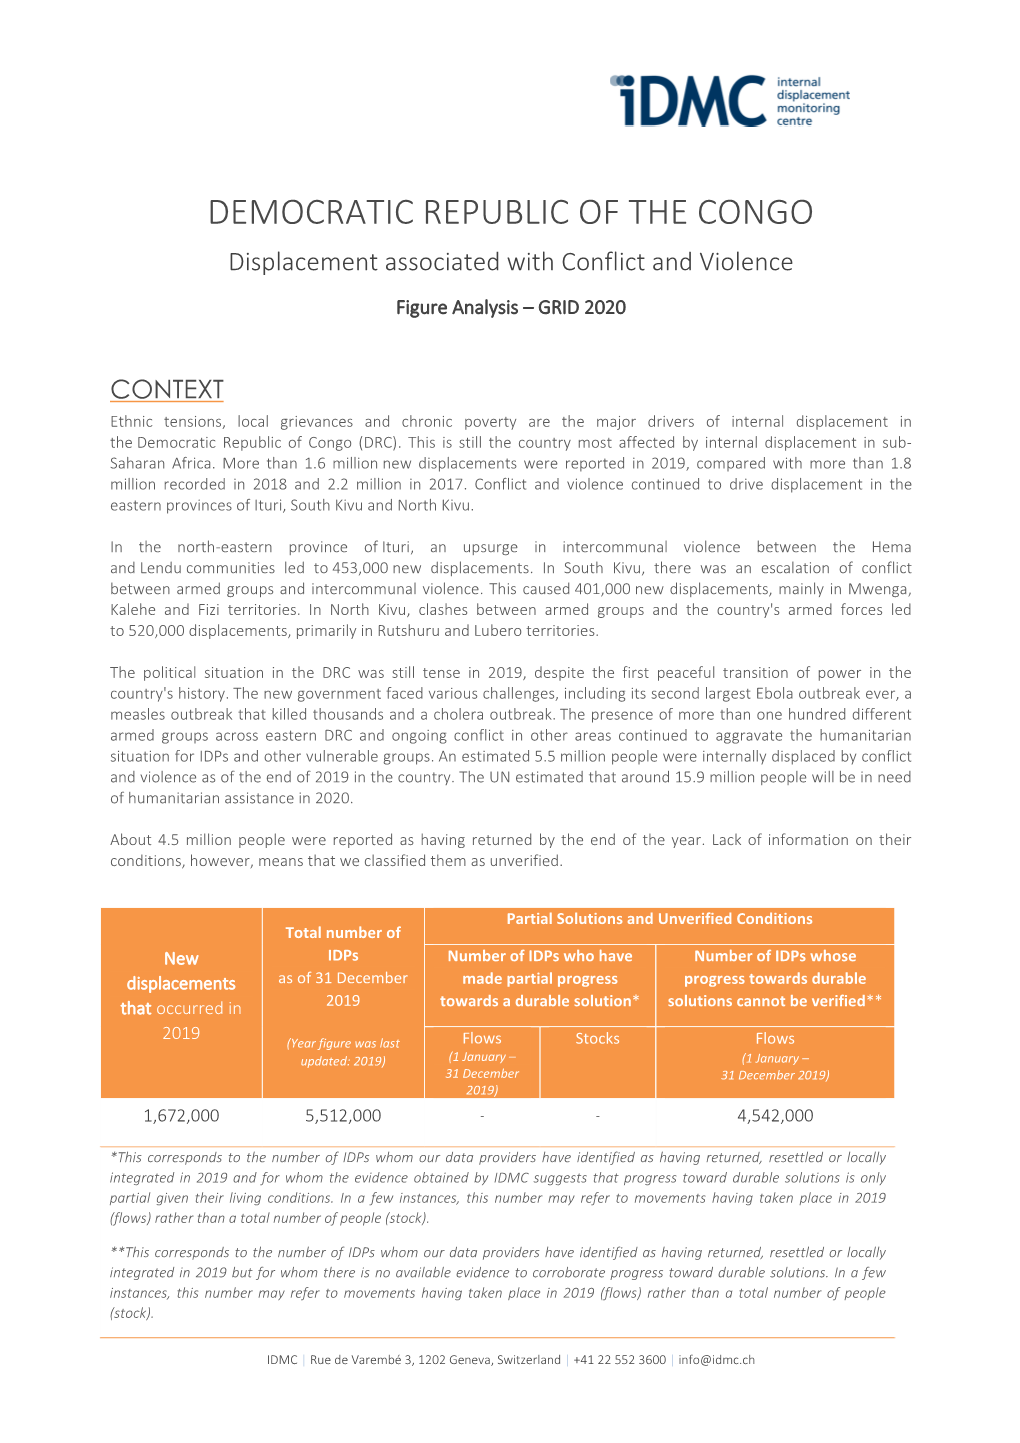 GRID 2020 – Conflict Figure Analysis – DRC.Docx